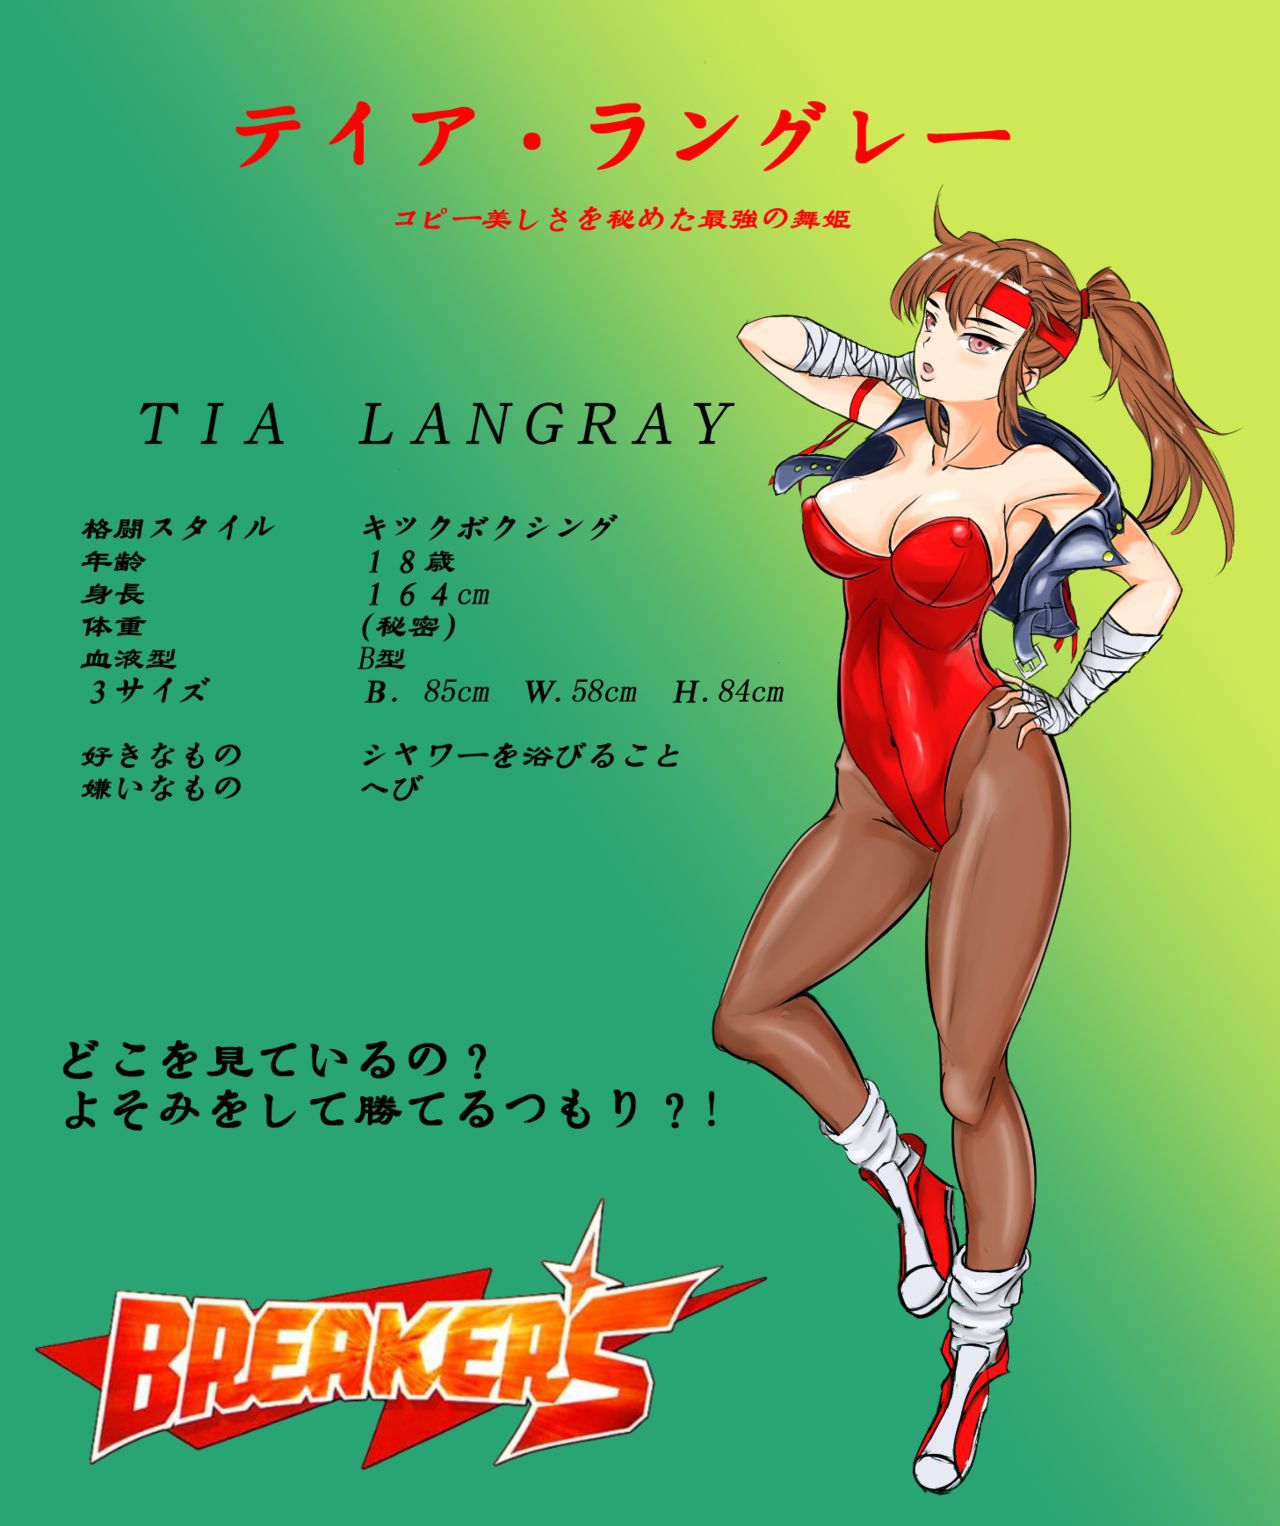 [VISCO/NeoGeo] Tia Langray from breakers revenges (various) - 200809 [ビスコ/ネオジオ] ブレイカーズ・リベンジ の ティア・ラングレー (よろず) - 200809 684